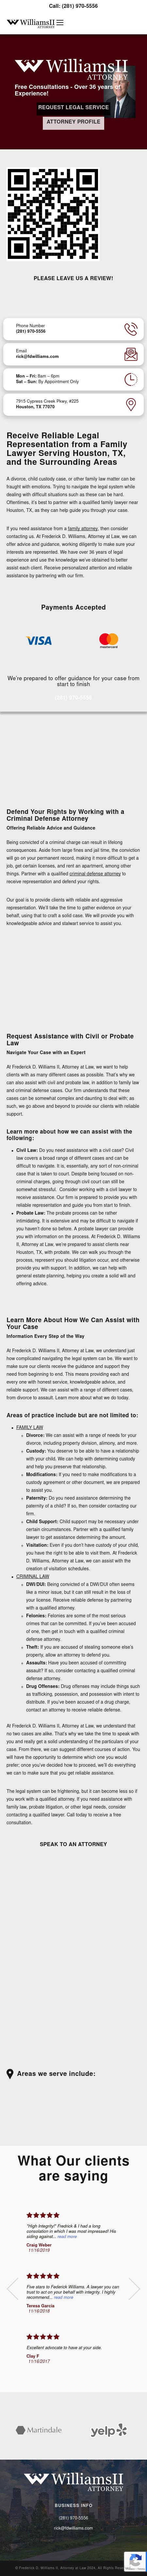 Moore & Associates - Houston TX Lawyers